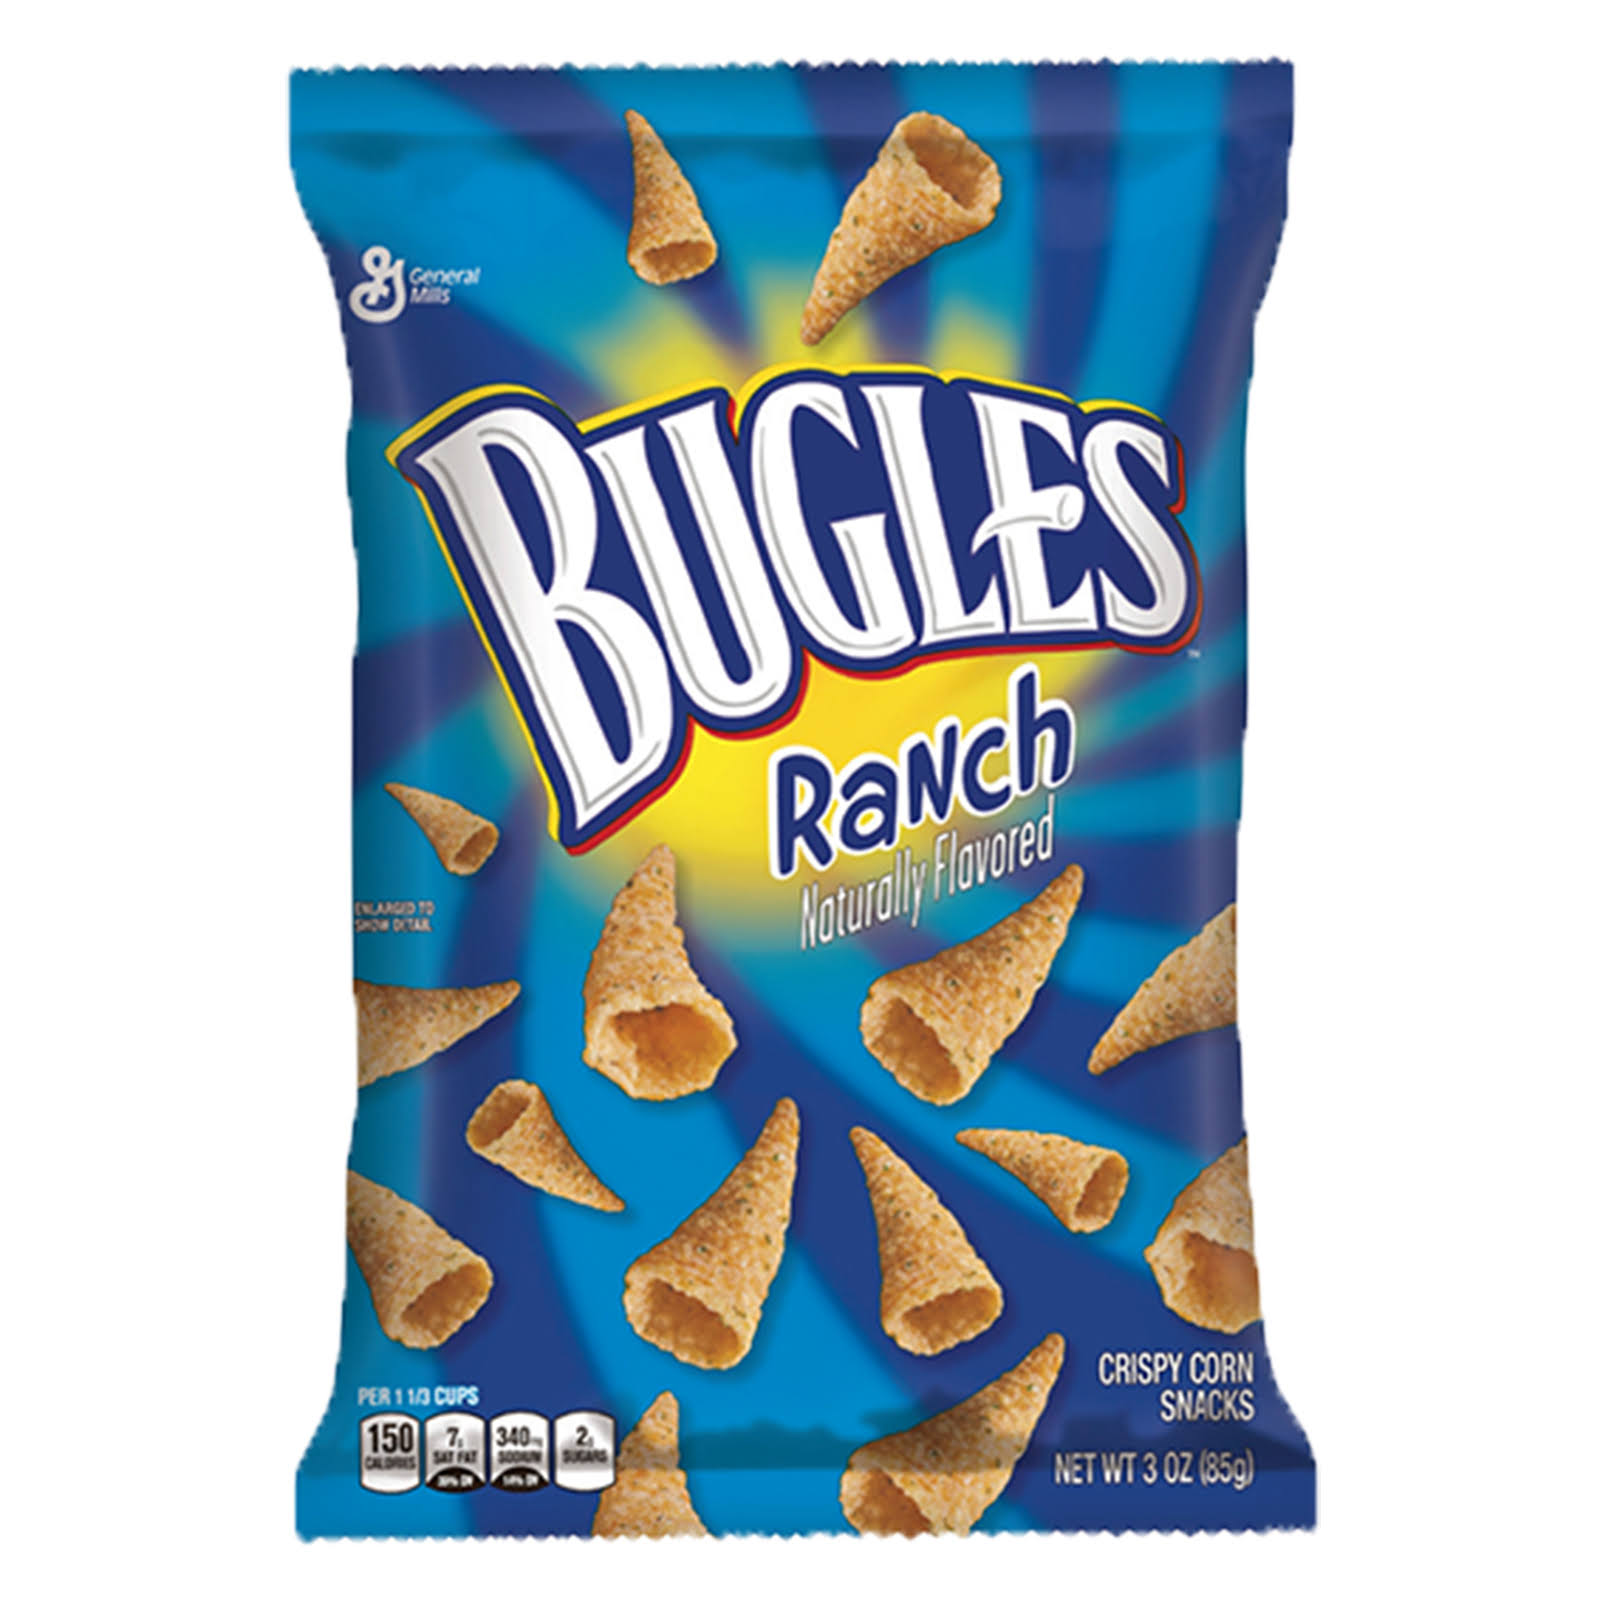 Bugles Ranch Naturally Flavored Crispy Corn Snacks - 3oz, 6pk